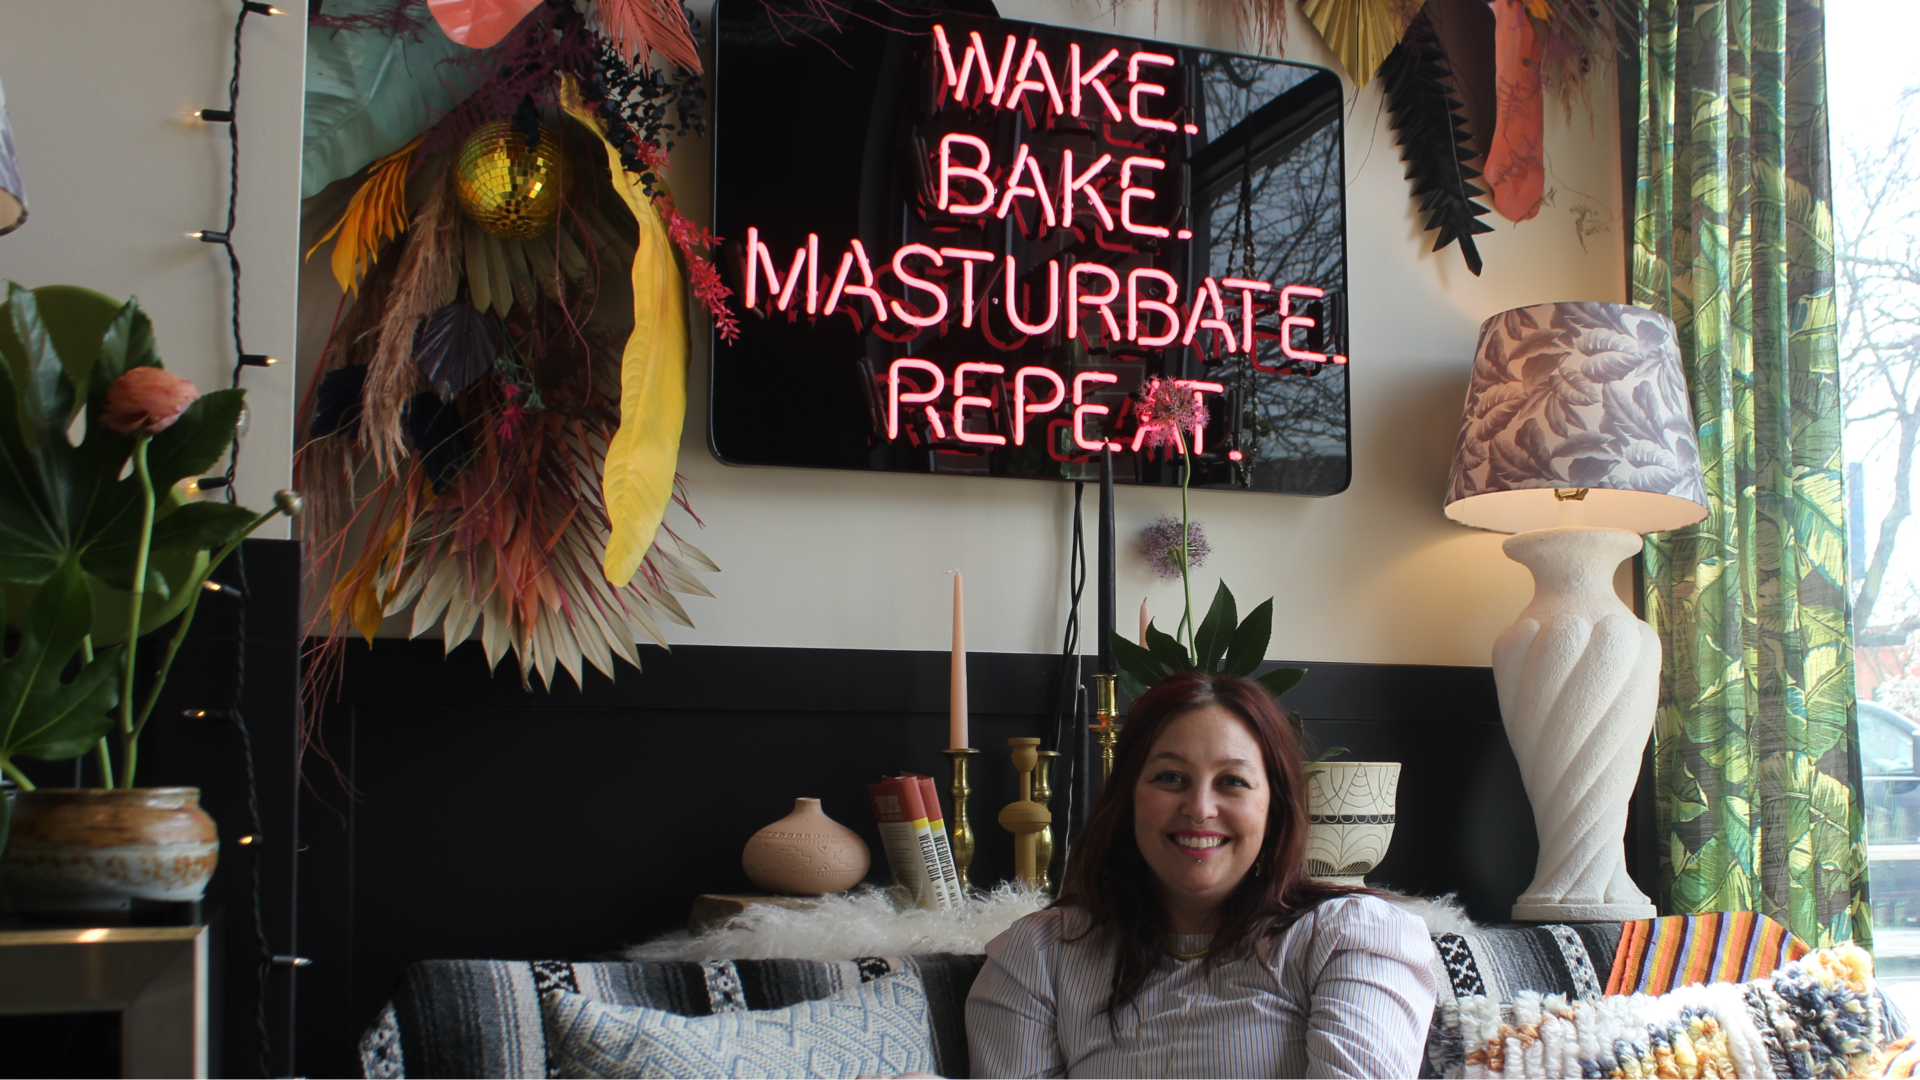 Andi in front of a "wake bake, masturbate, repeat" sign